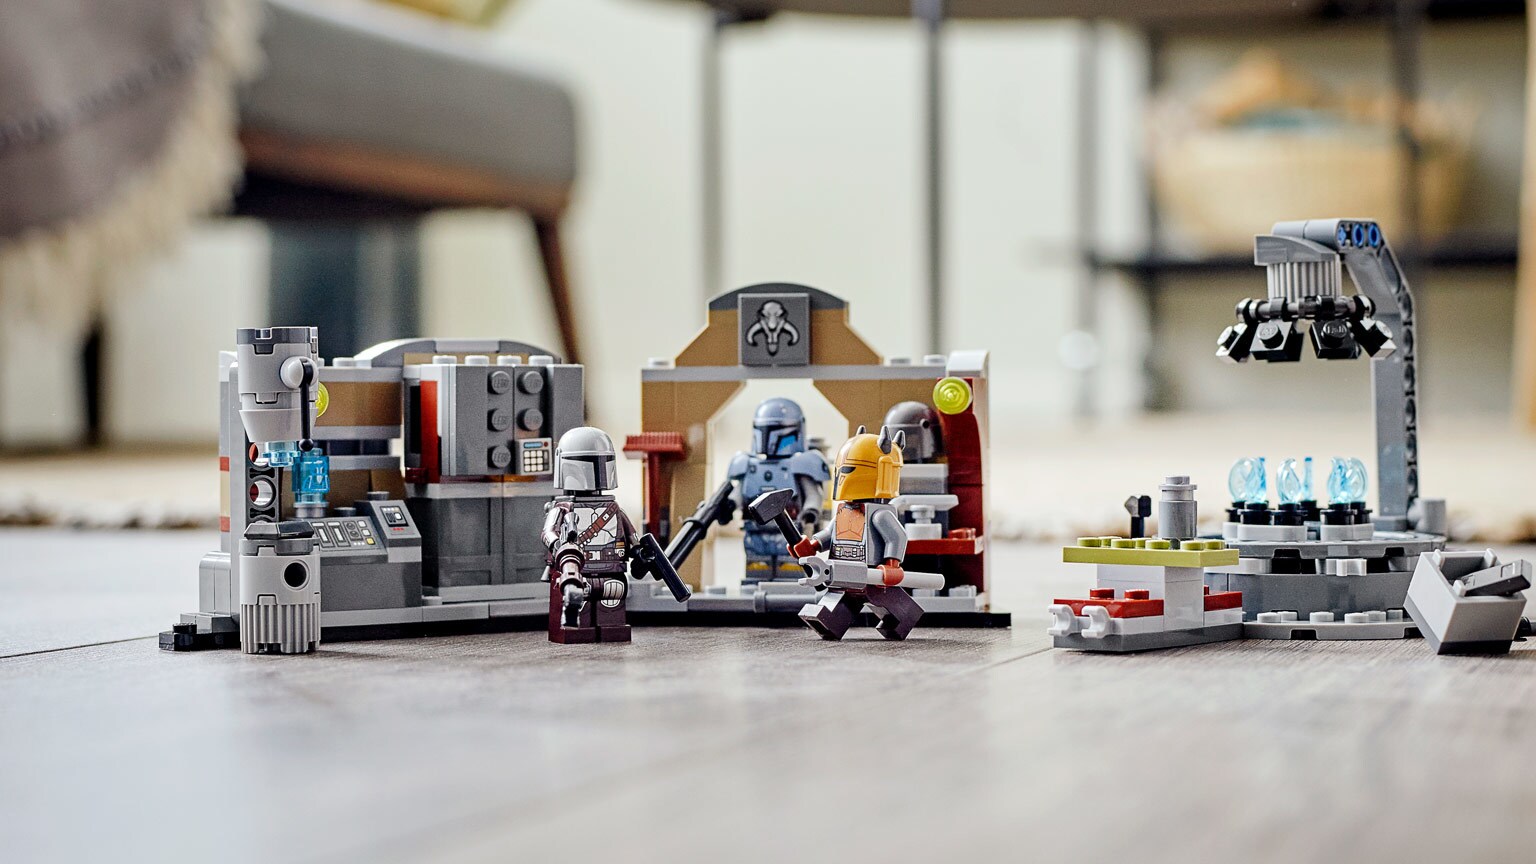 New LEGO Star Wars sets from The Mandalorian season 3 revealed